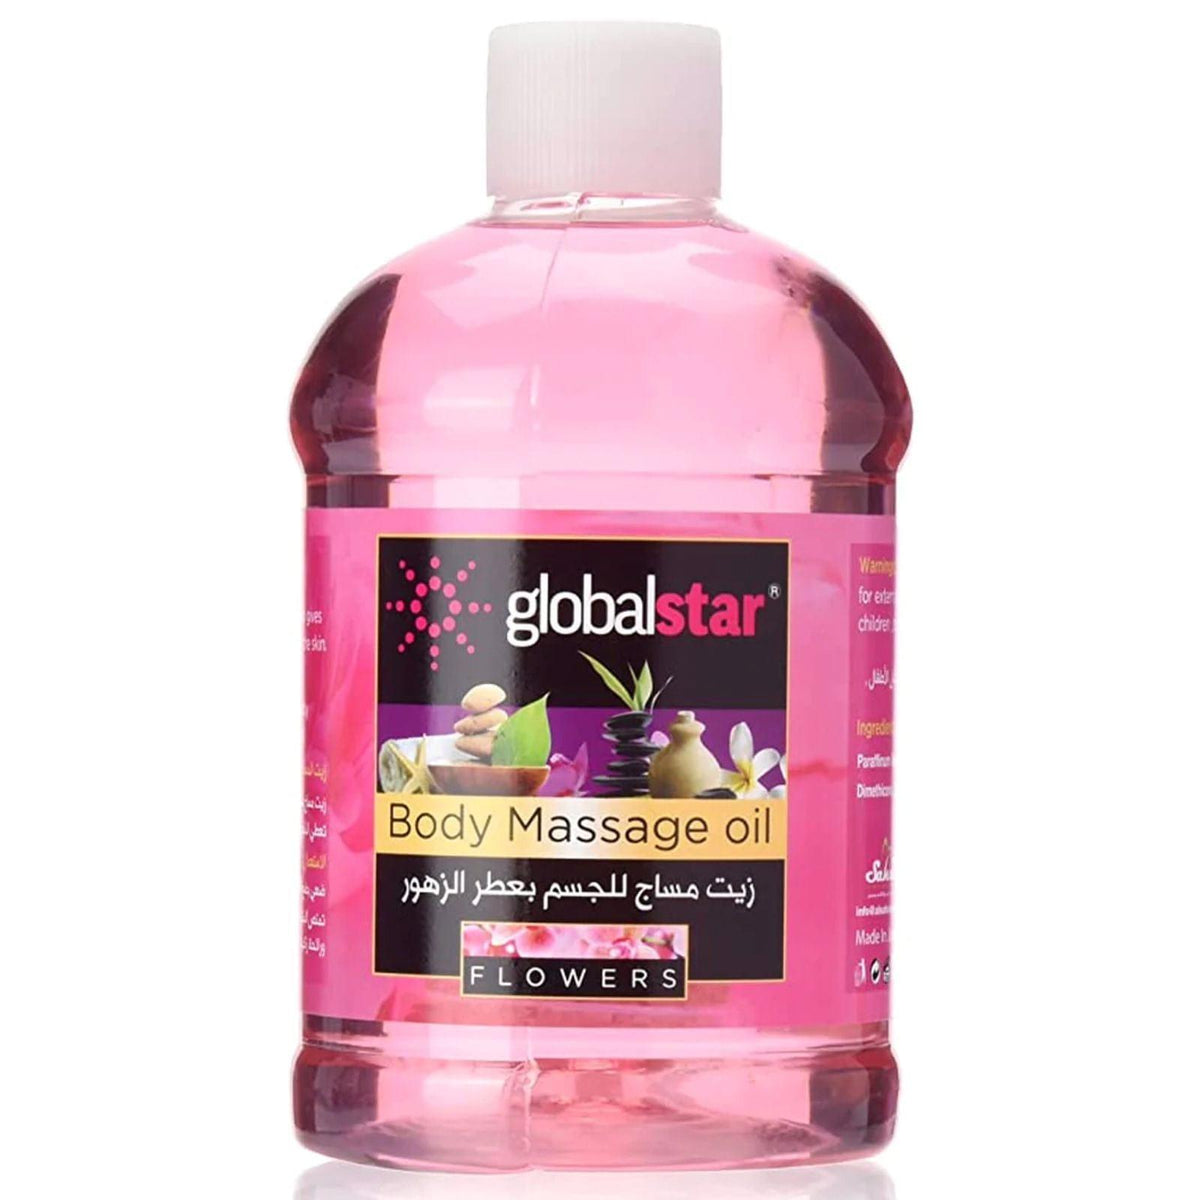 Globalstar Body Massage Oil Flowers Scent 500ml